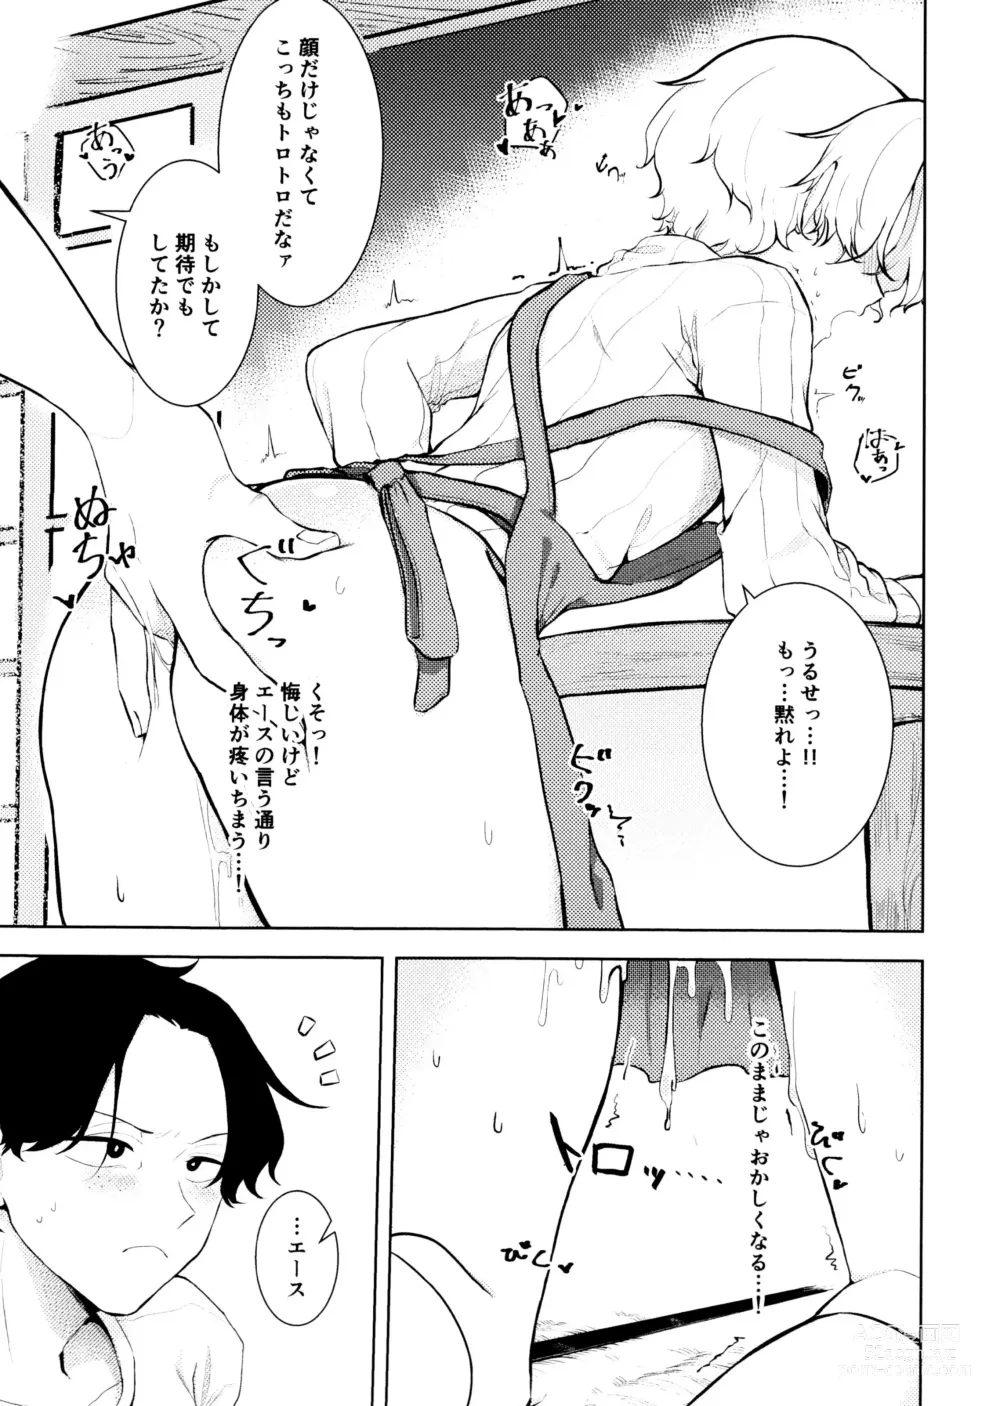 Page 13 of doujinshi Fuyu to Knit to Apron to